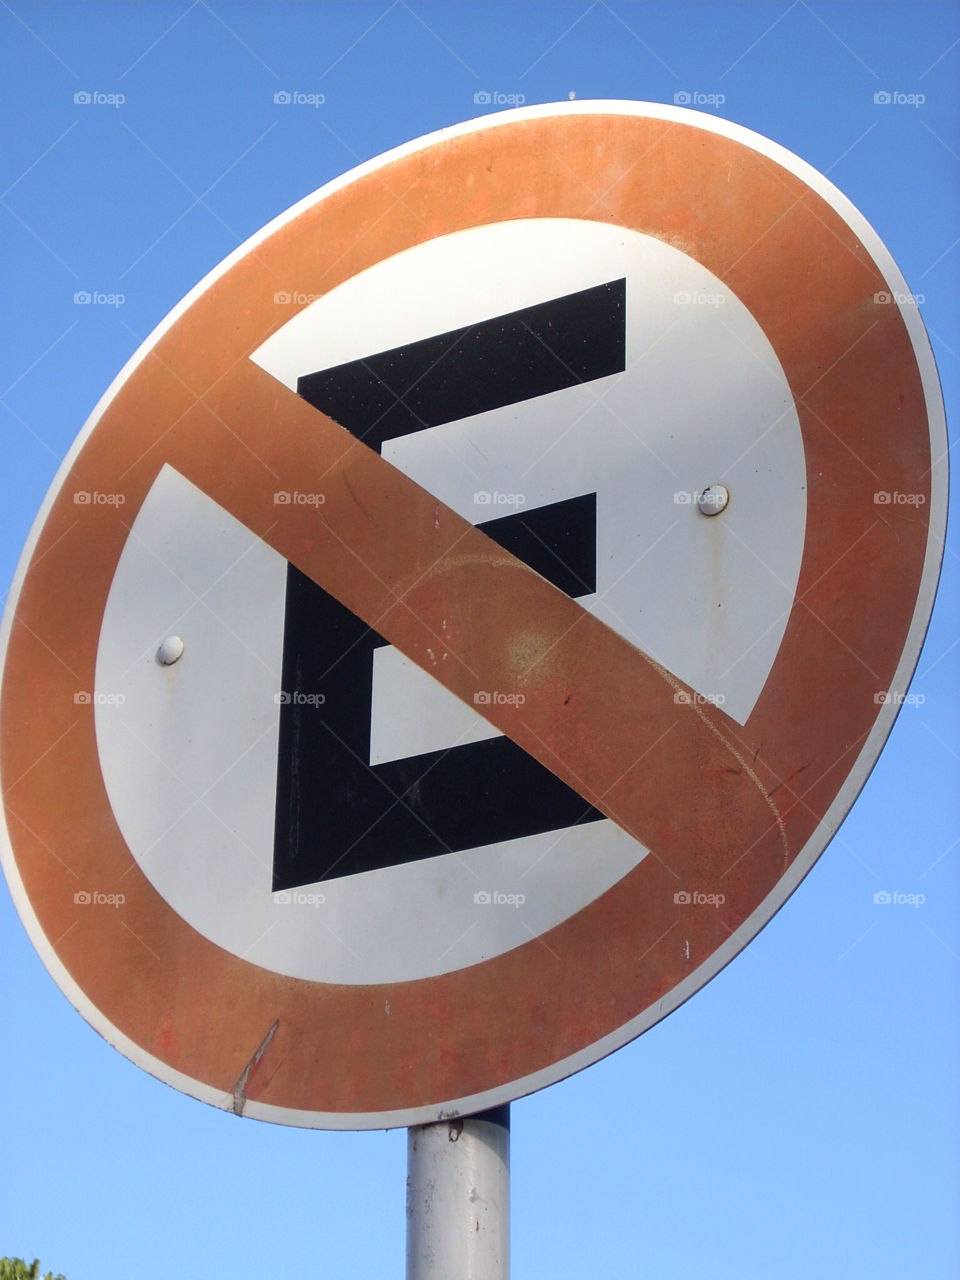 parking stop non prohibido by sergioesteban